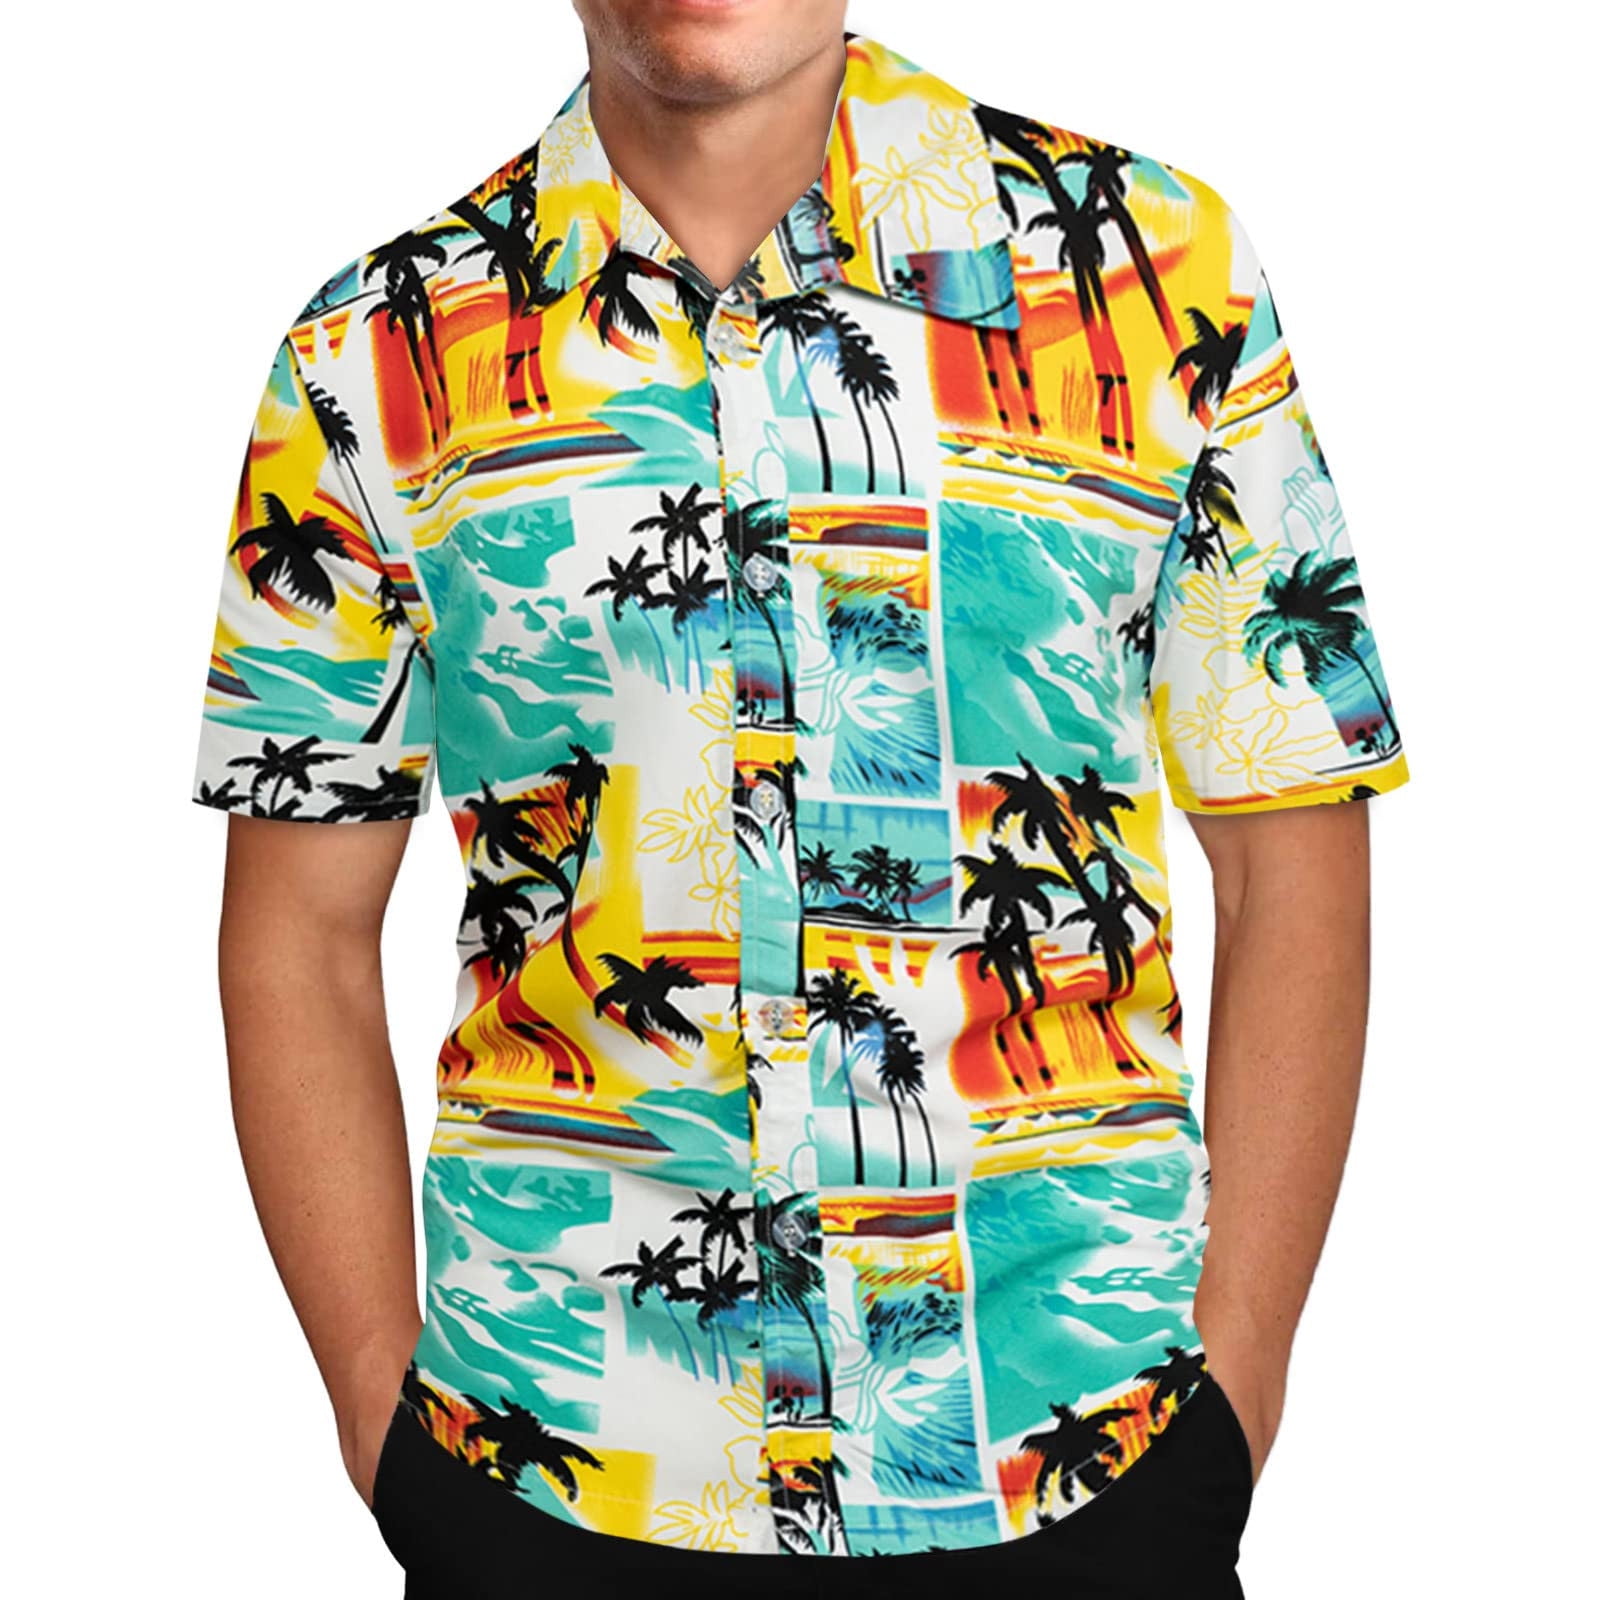  Zxrwany Men's Short Sleeve Button Up Cotton Shirts Summer  Casual,Polo Hawaiian Shirt Men's Short Sleeve Shirts Xxxl Men's Graphic  Sleeveless Shirts Men Beach Wear(1-Black,Medium) : Clothing, Shoes & Jewelry